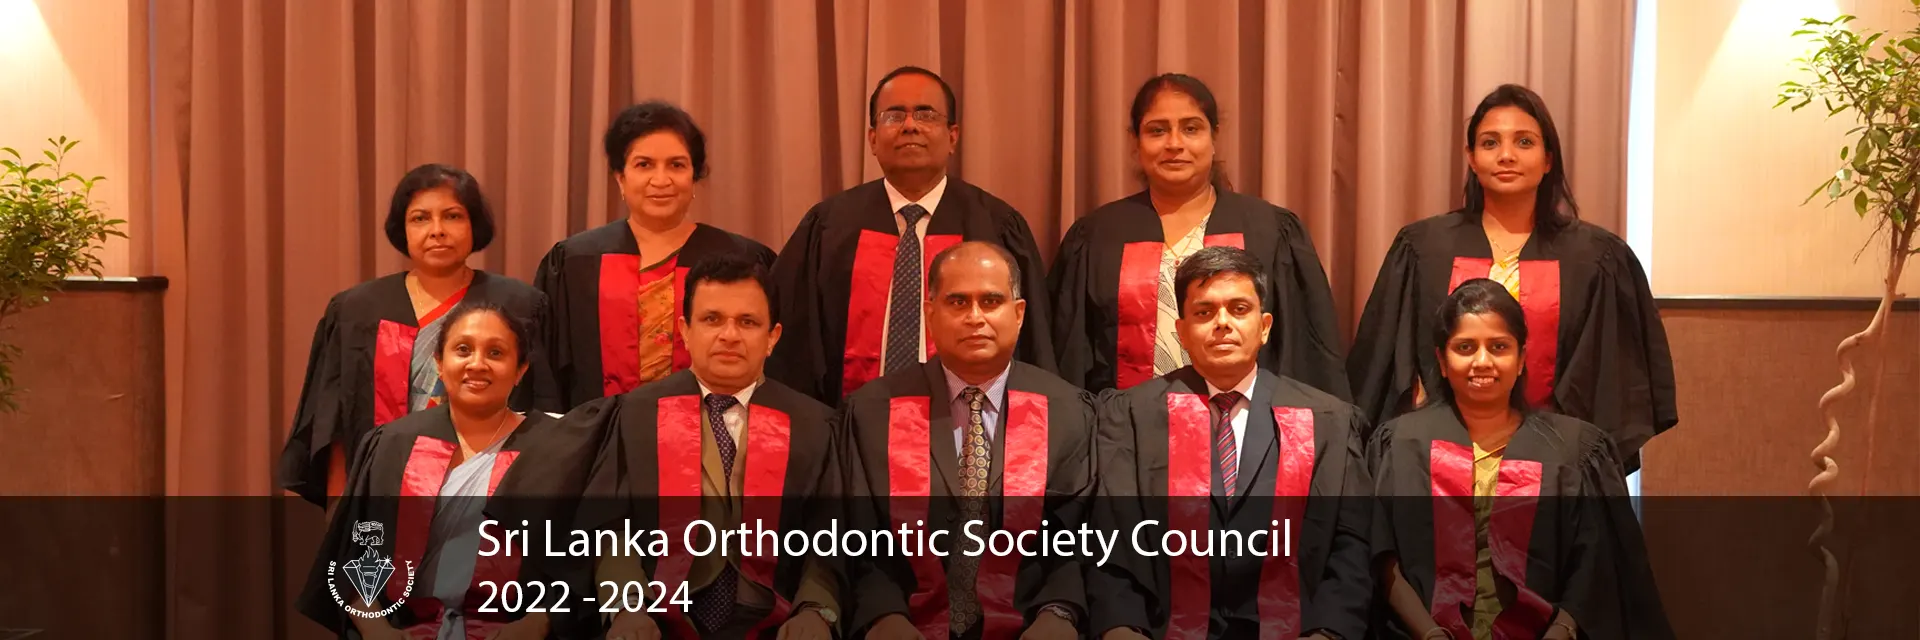 Sri Lanka Orthodontic Society - Annual Meeting 2021